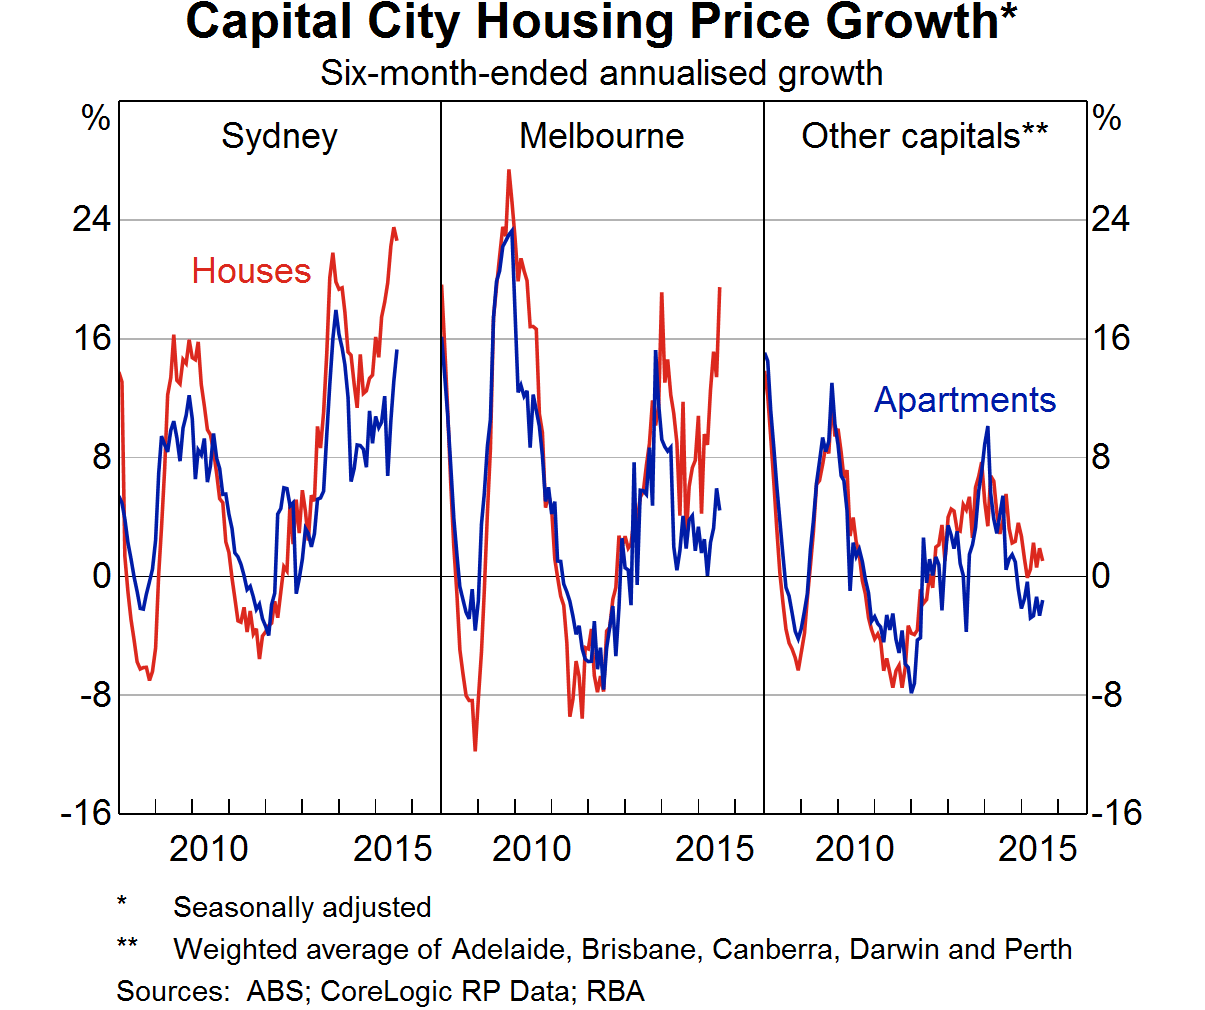 Capital City Housing Price Growth